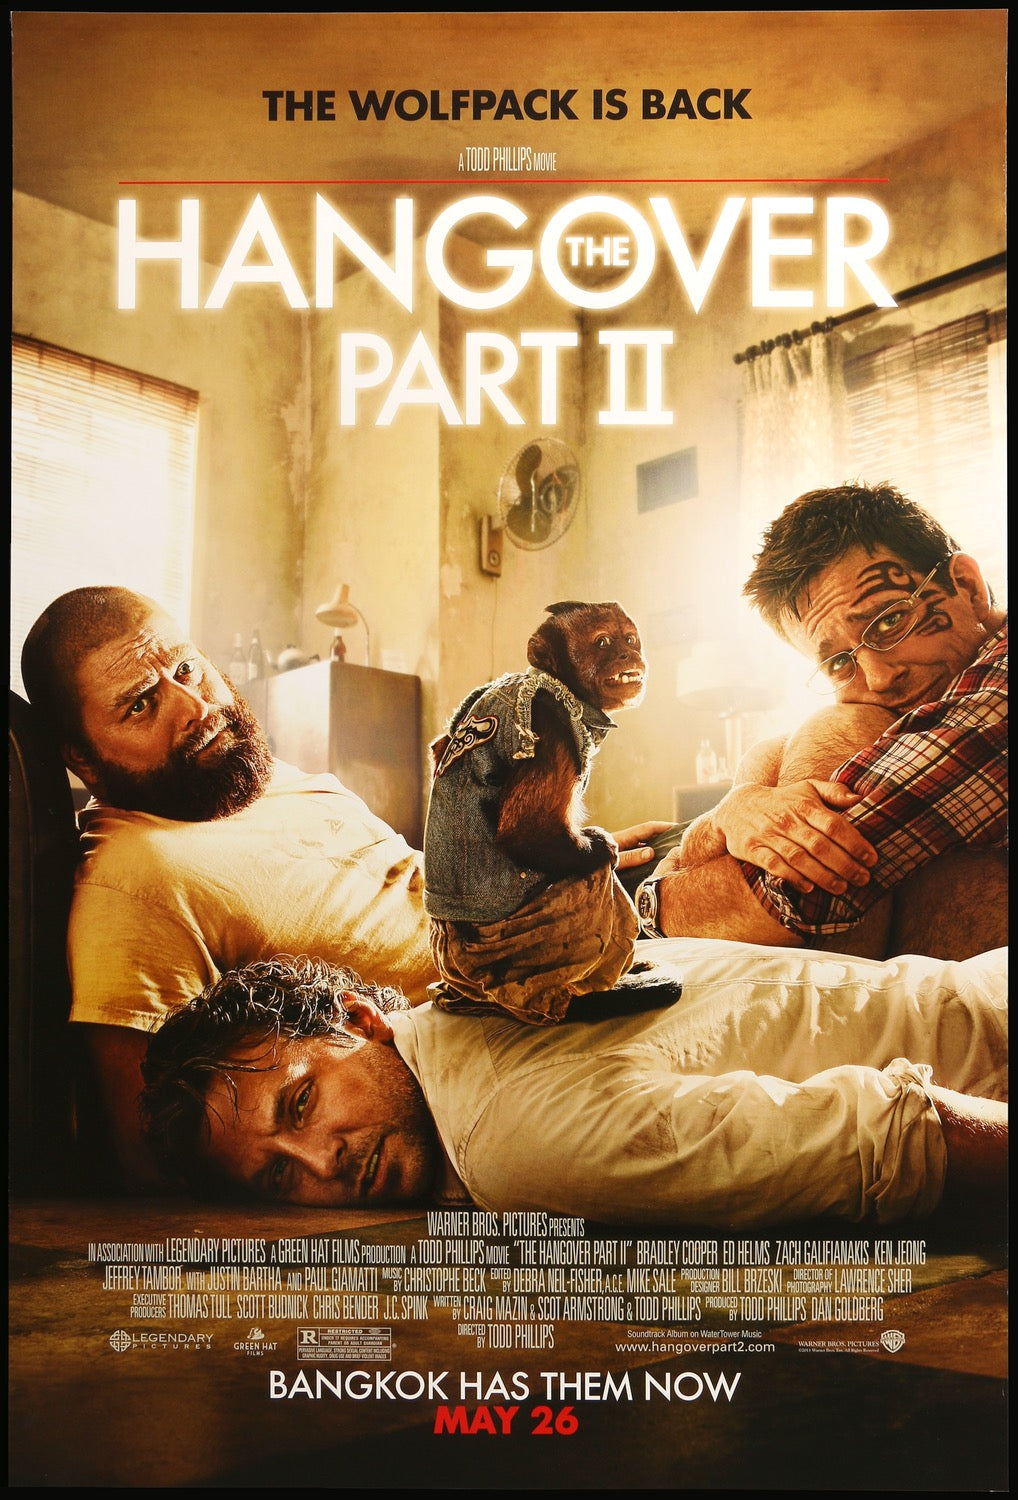 Hangover Part 2 (2011) original movie poster for sale at Original Film Art